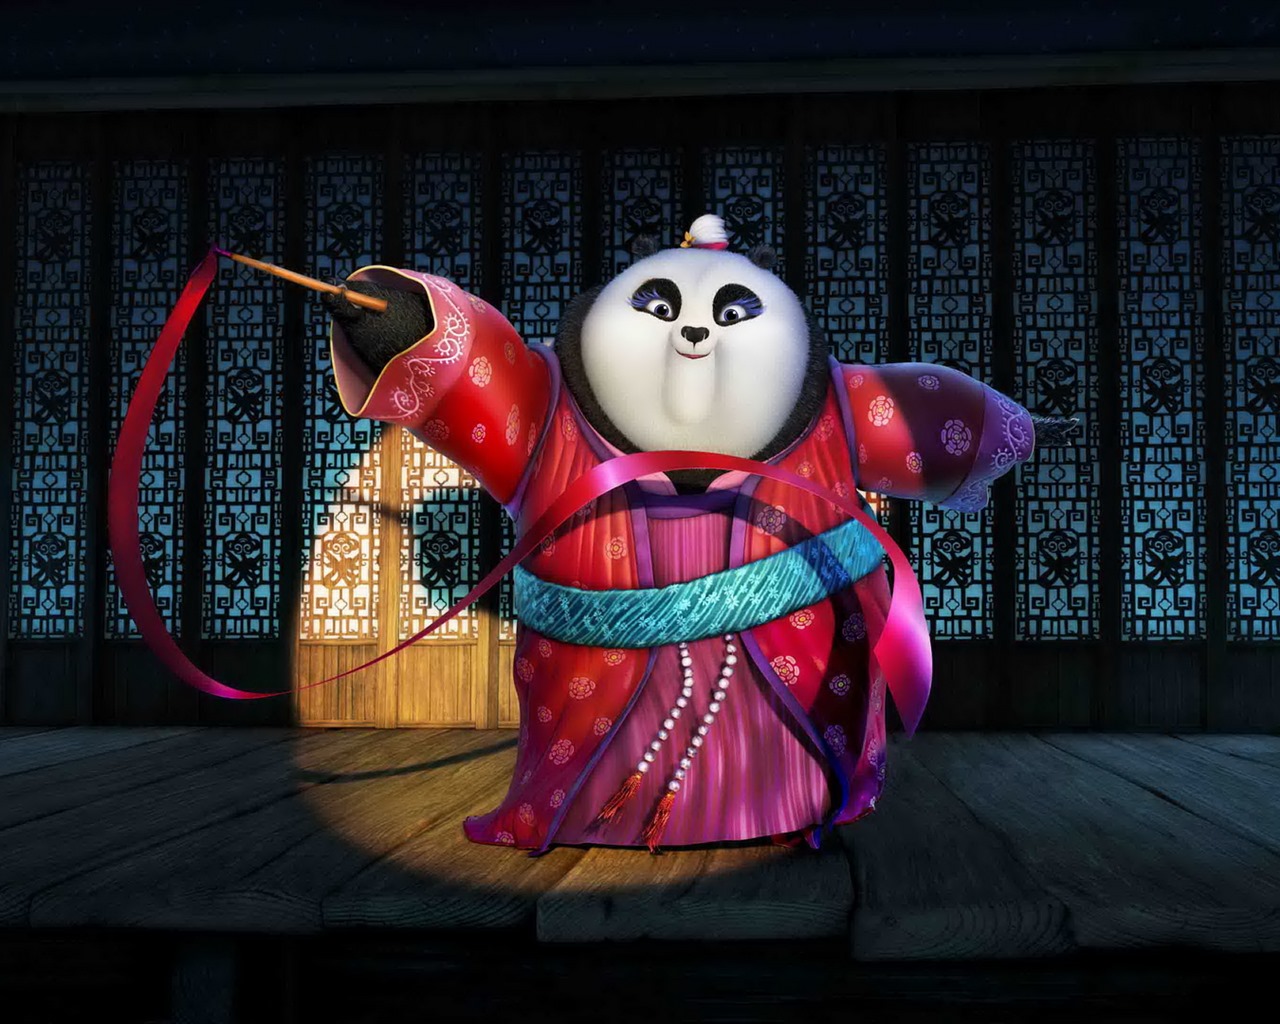 Kung Fu Panda 3, fondos de pantalla de alta definición de películas #10 - 1280x1024